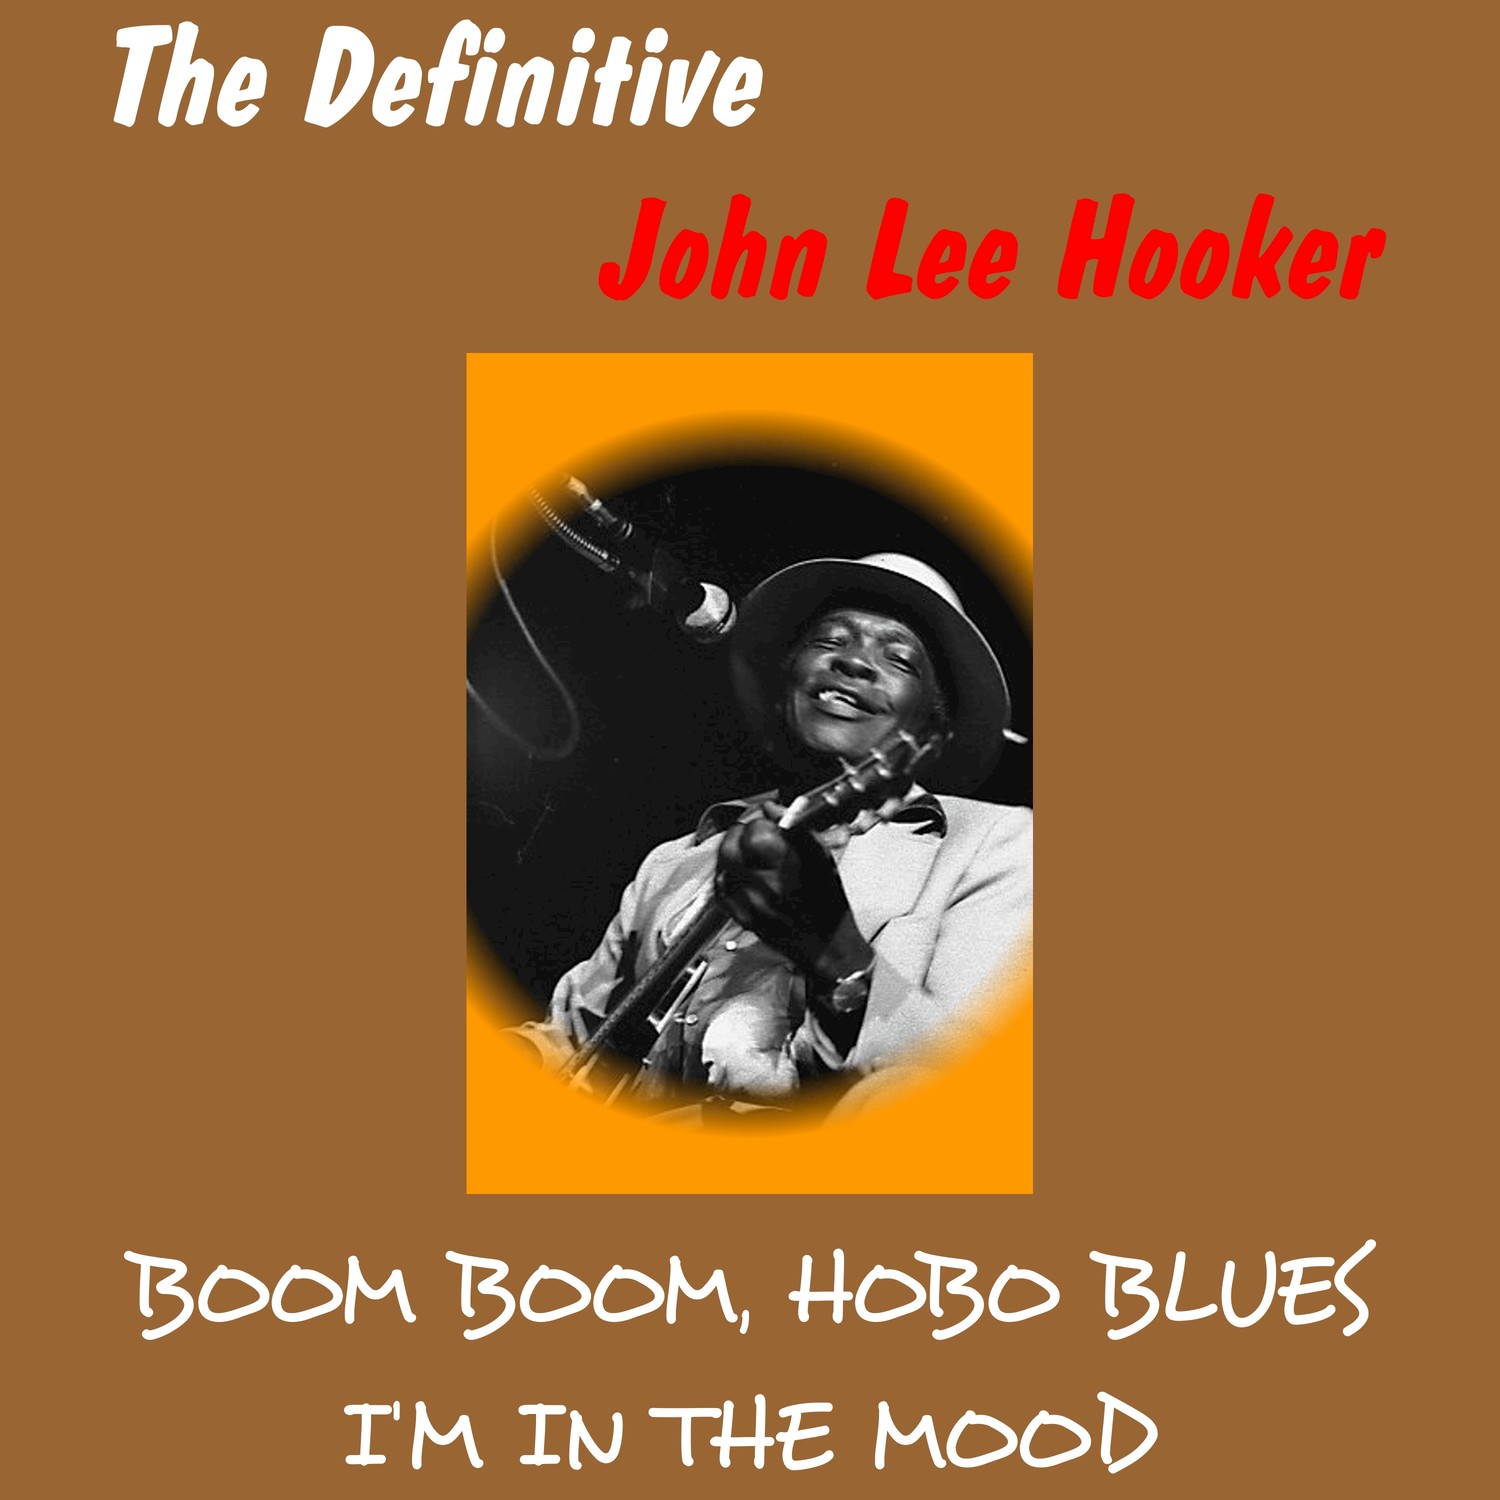 The Definitive John Lee Hooker